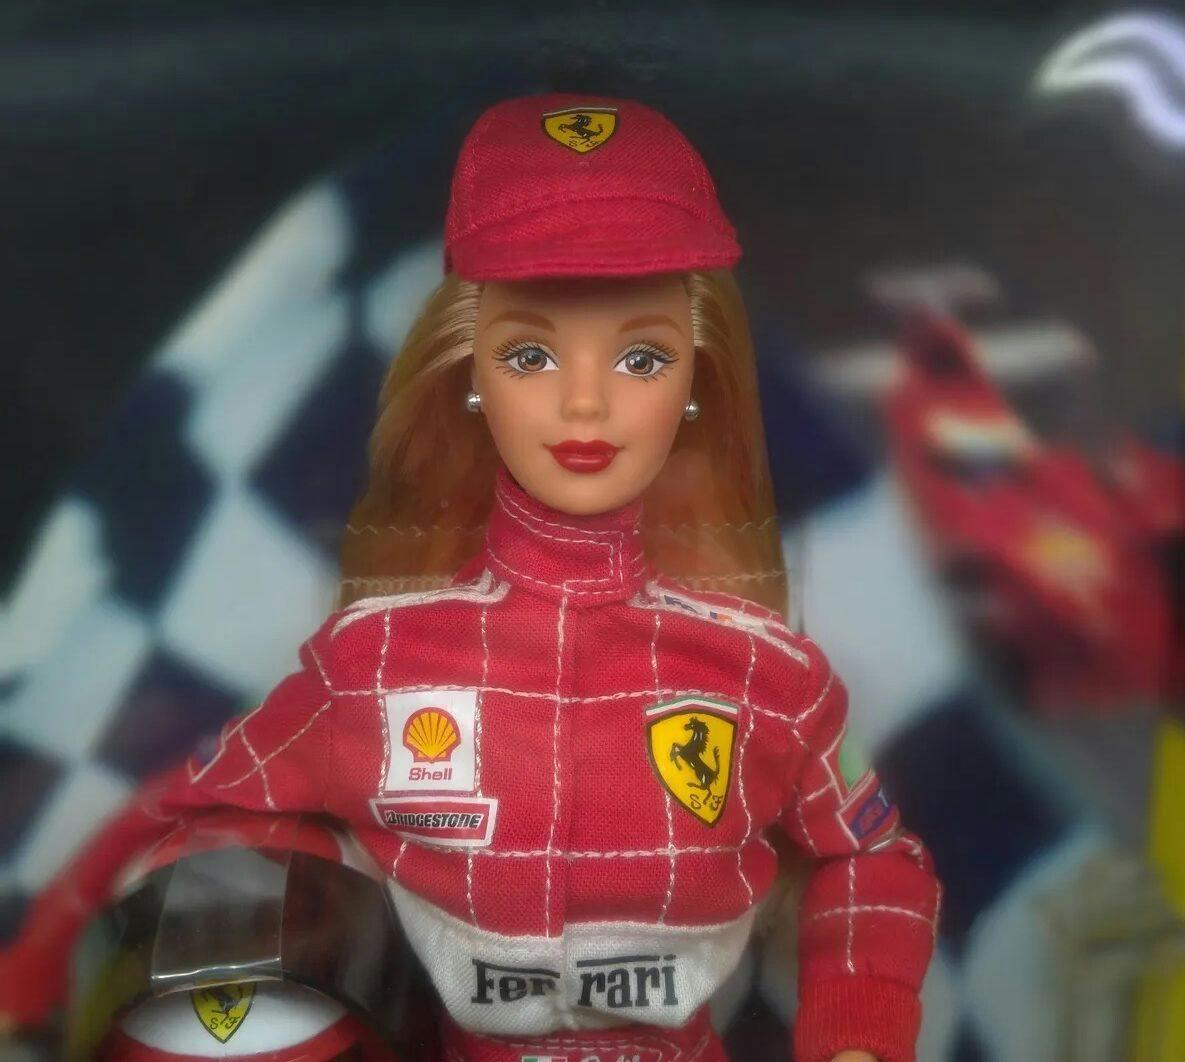 Ferrari F1 barbie toy